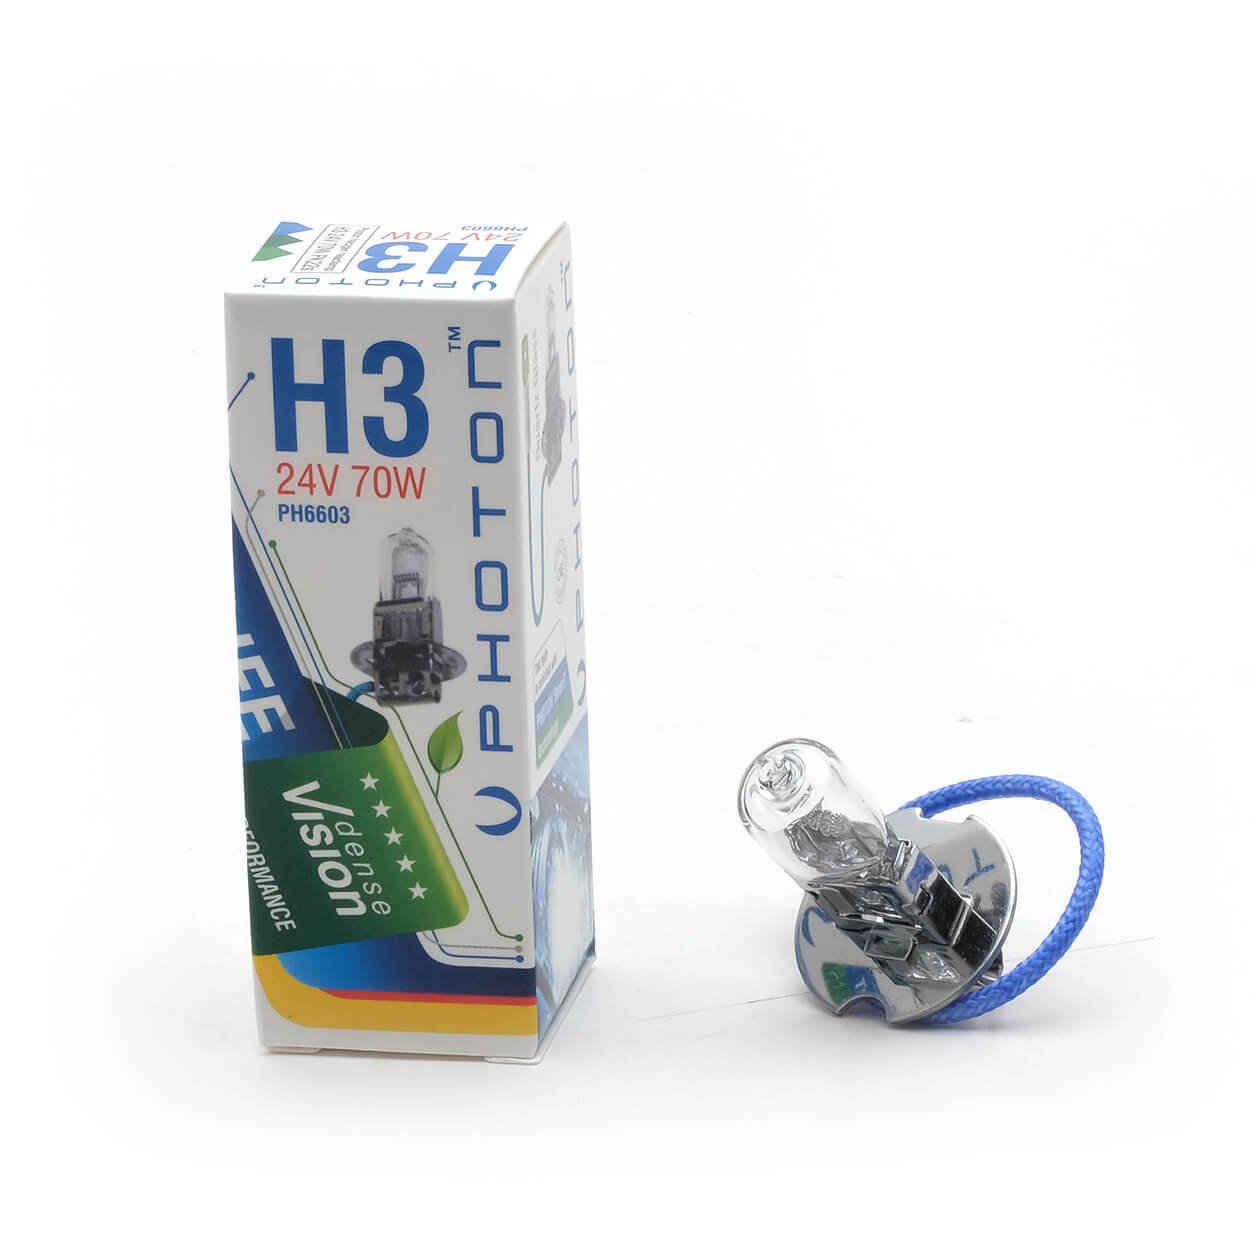 Photon H3 24V 70W Standart Halogen